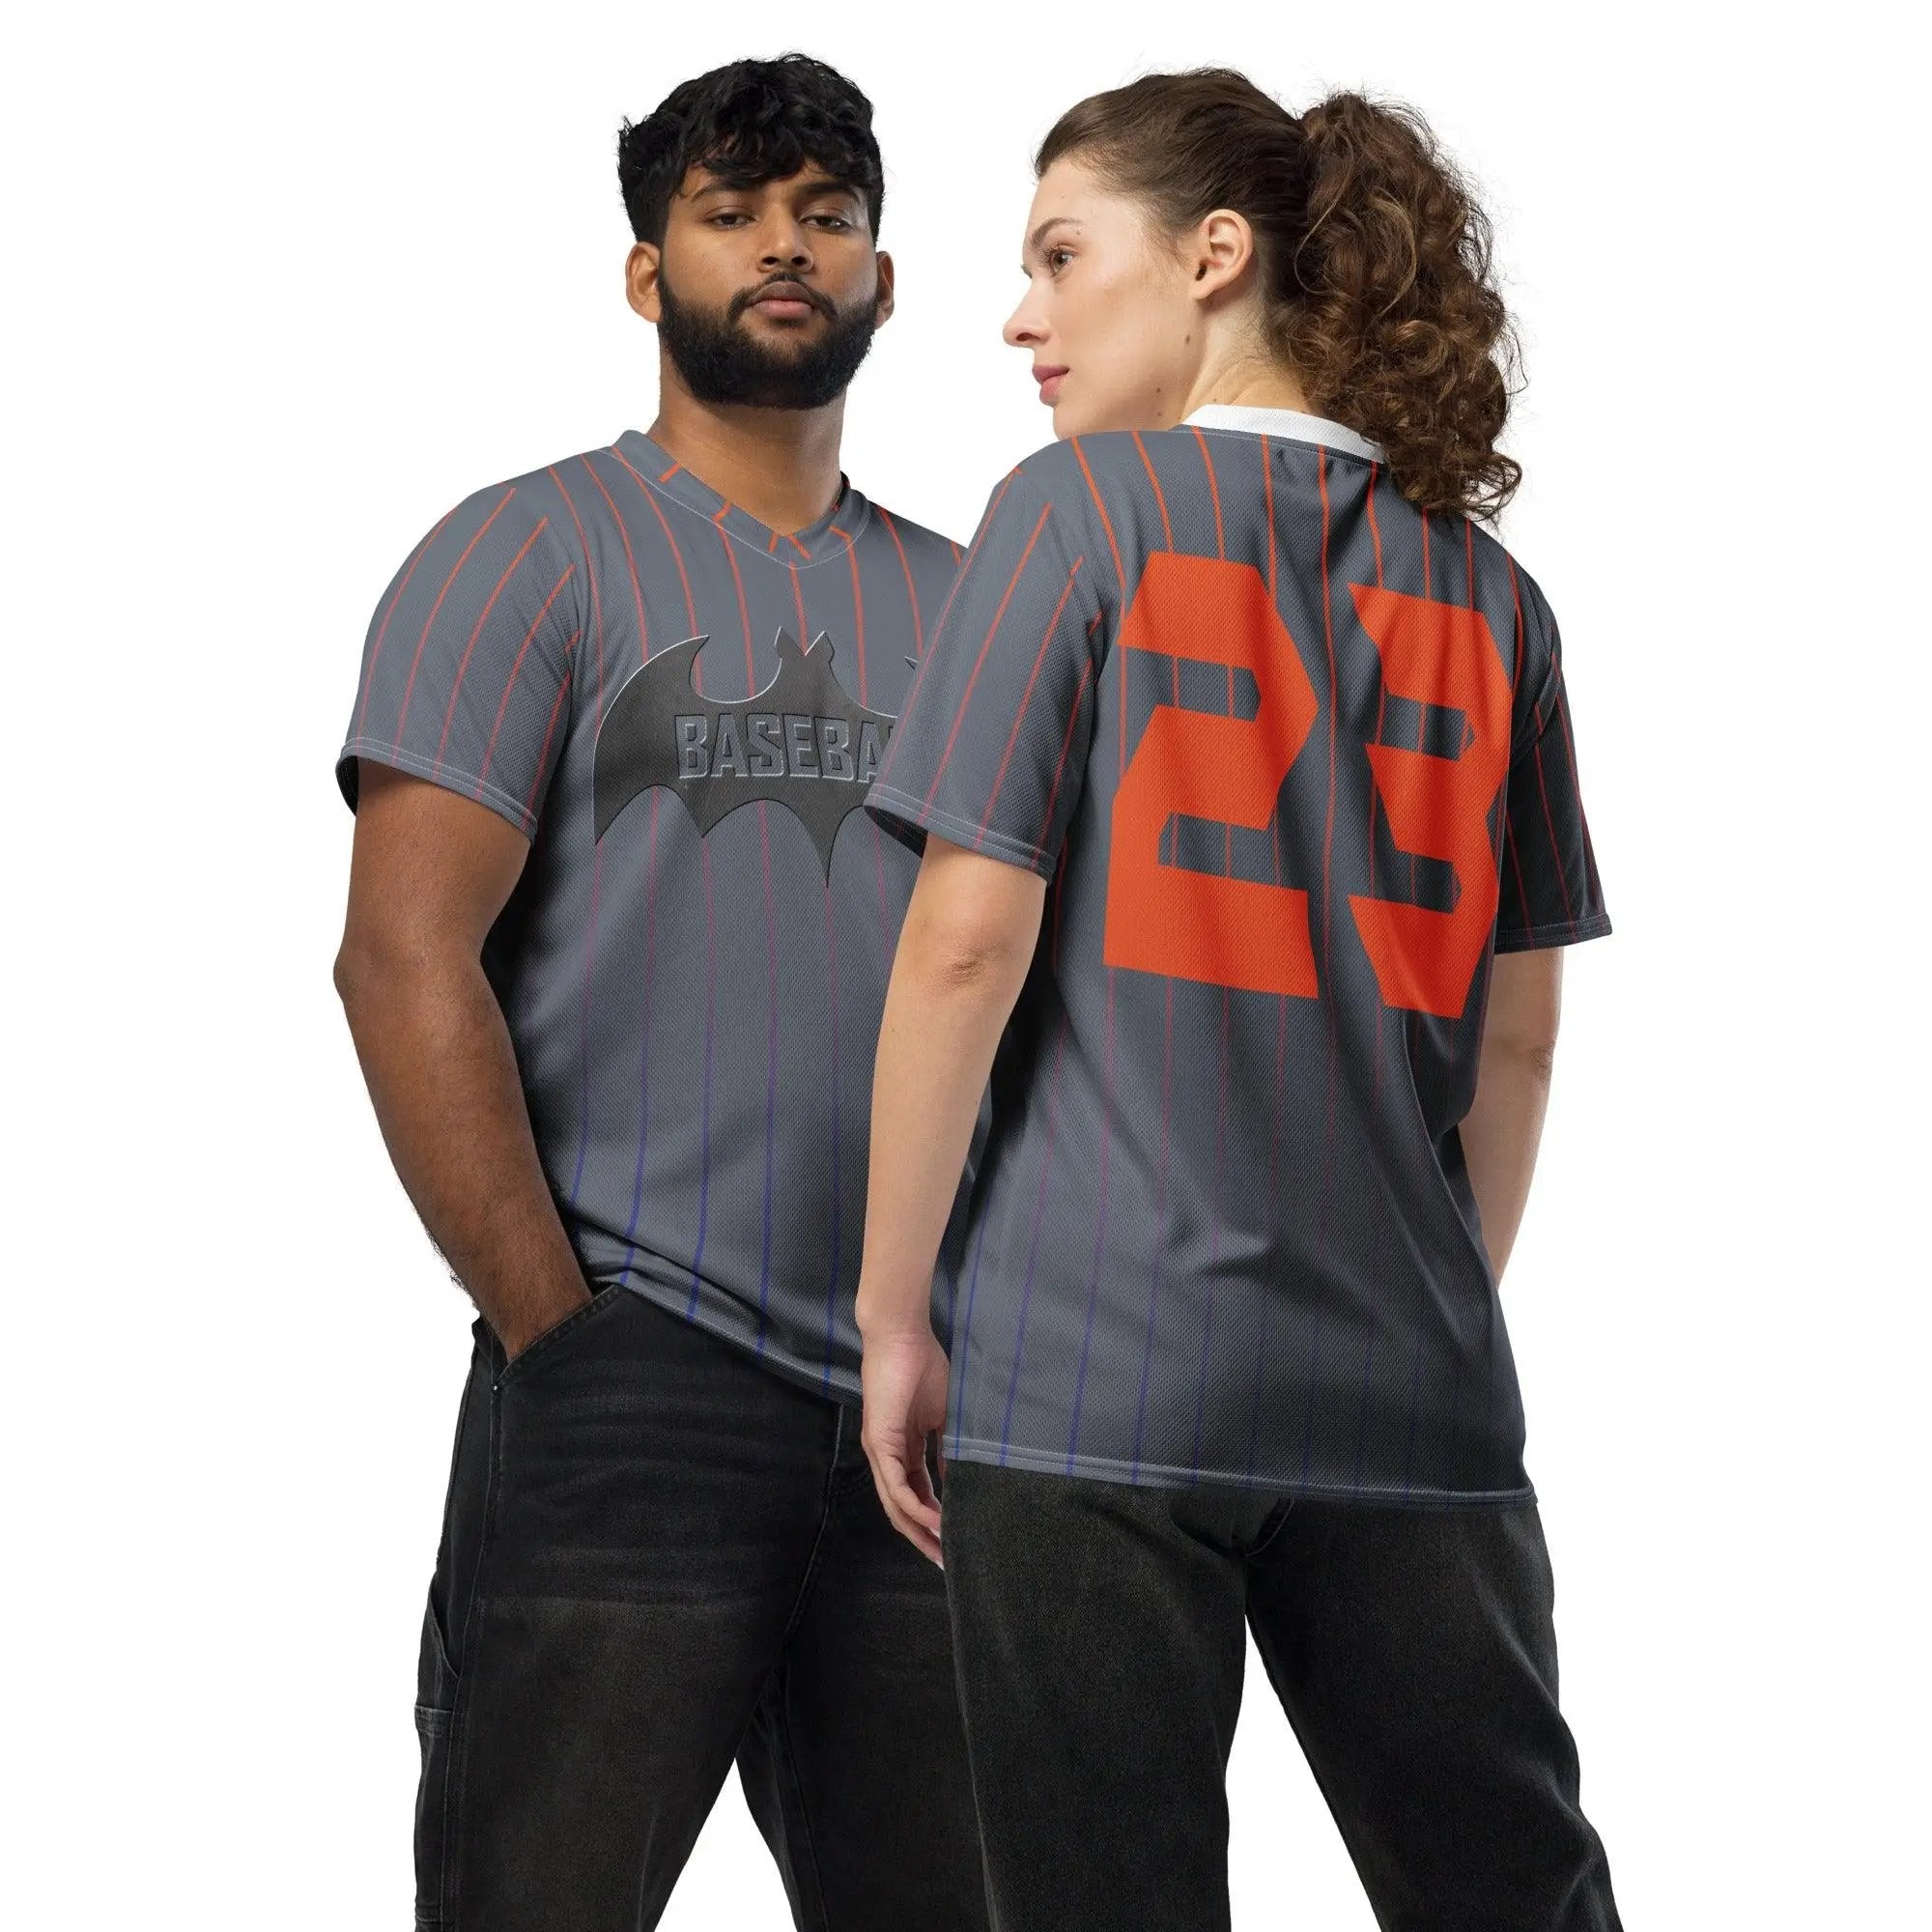 Baseball Bat Recycled unisex sports jersey VAWDesigns